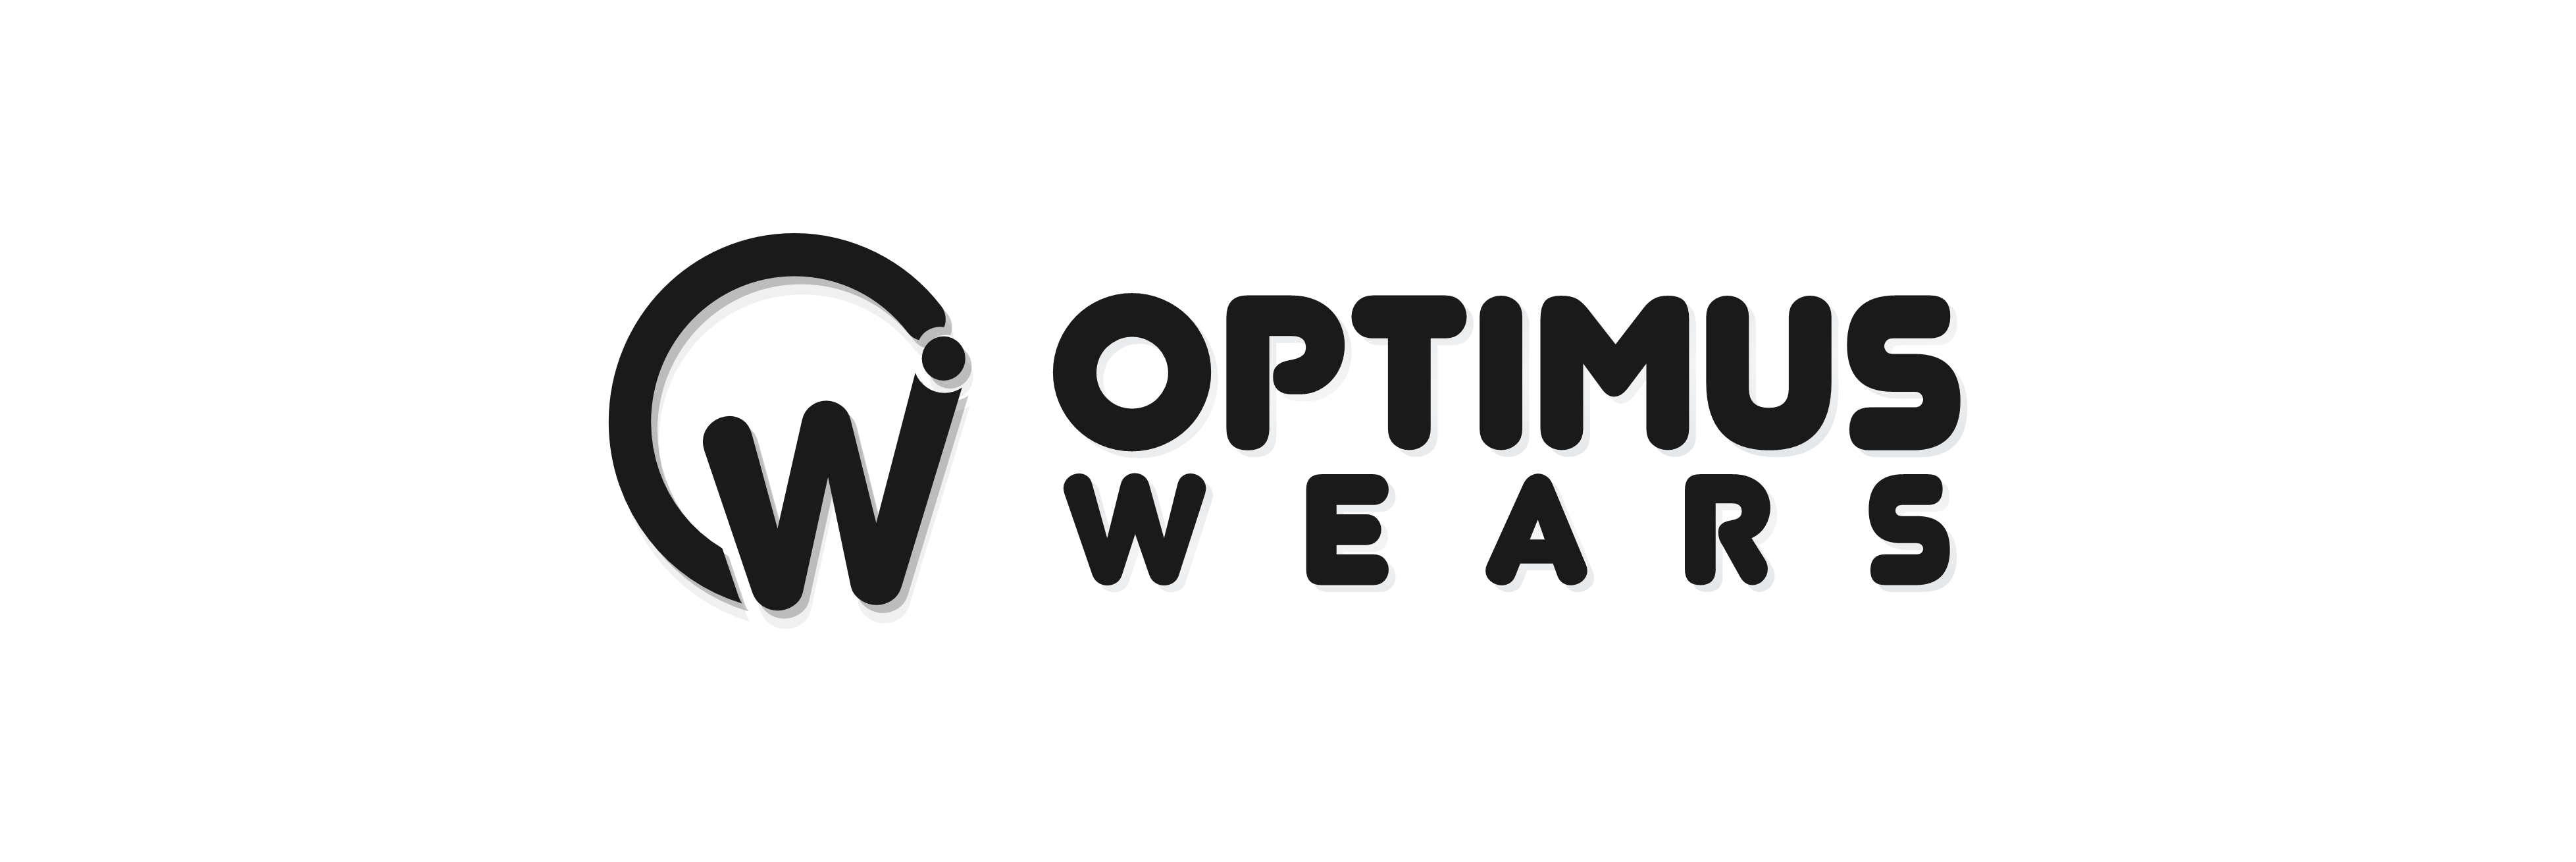 Optimus wears logo